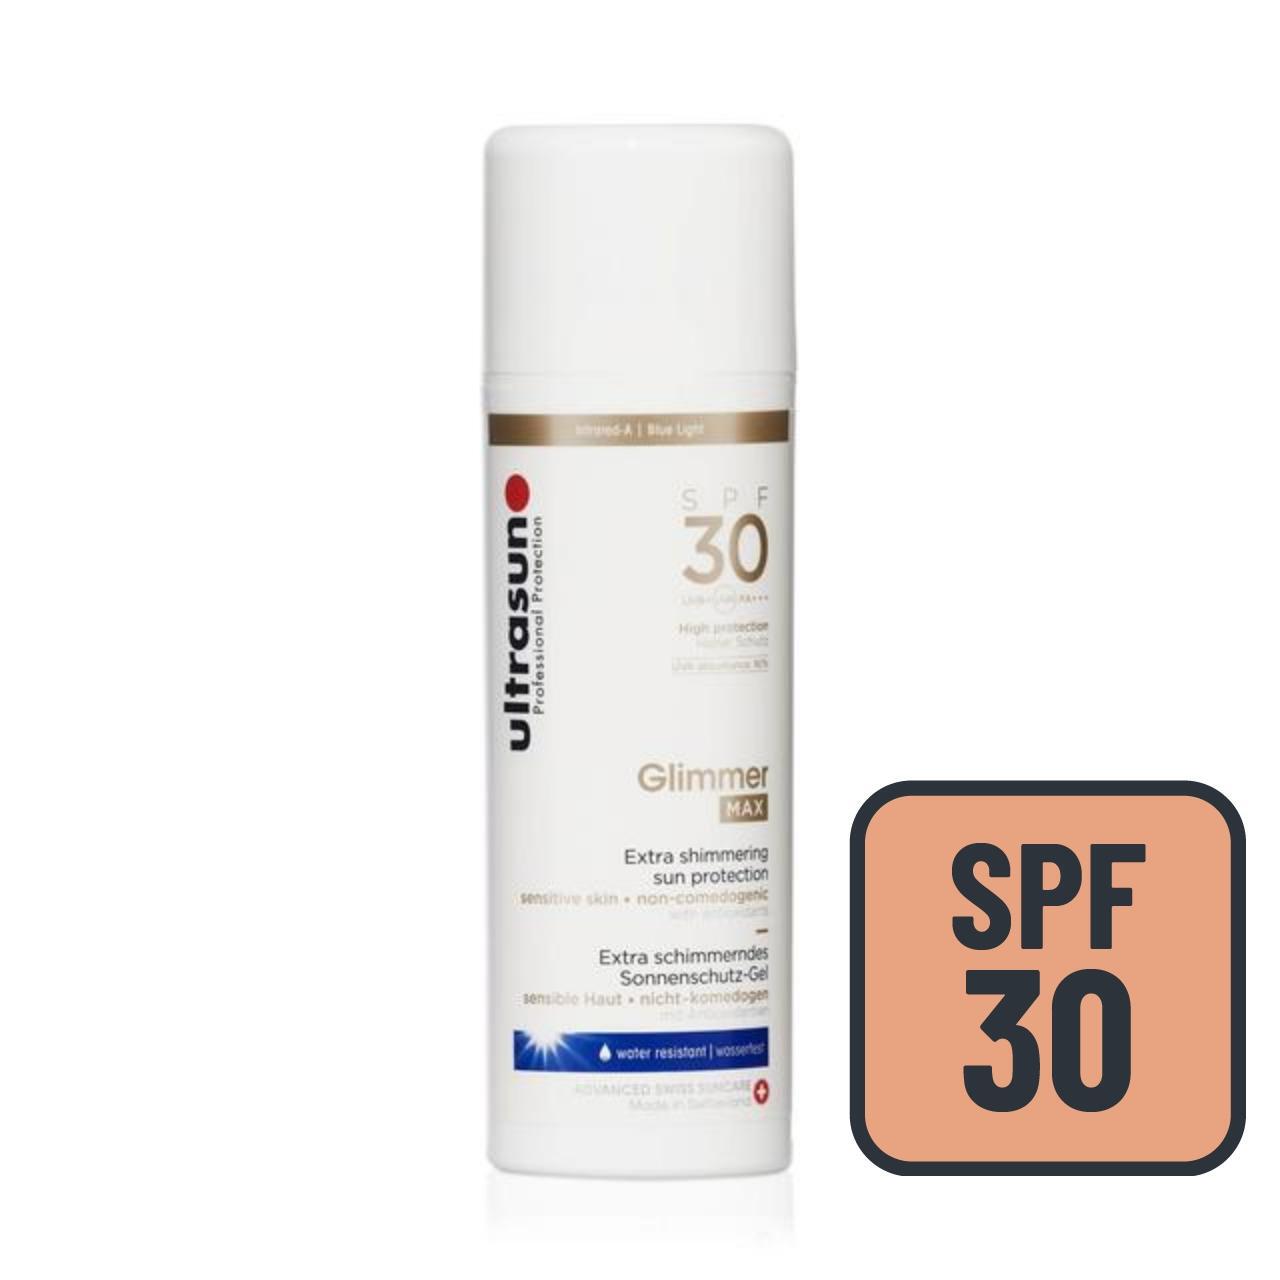 Ultrasun SPF 30 Glimmer Max Shimmering Sunscreen 150ml